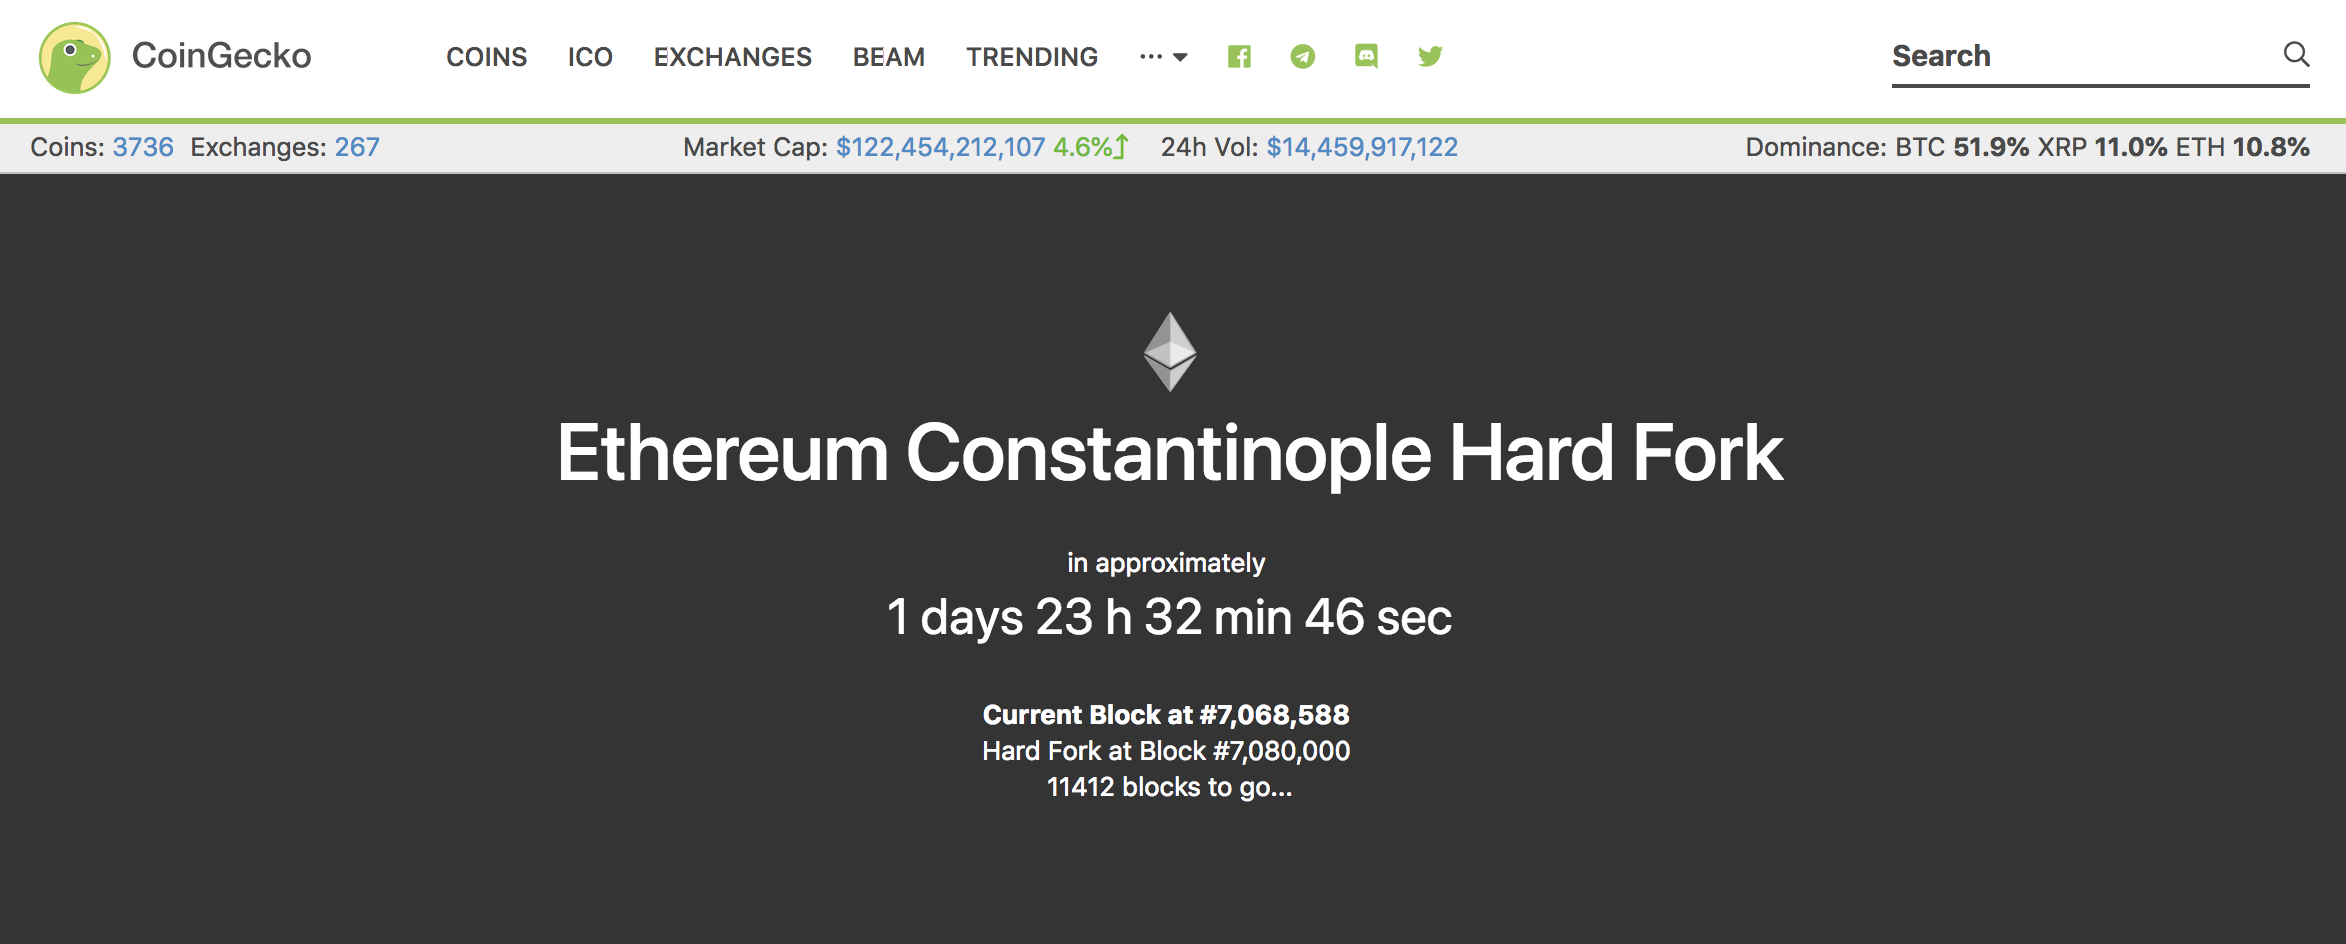 Ethereum fork countdown stakenet crypto